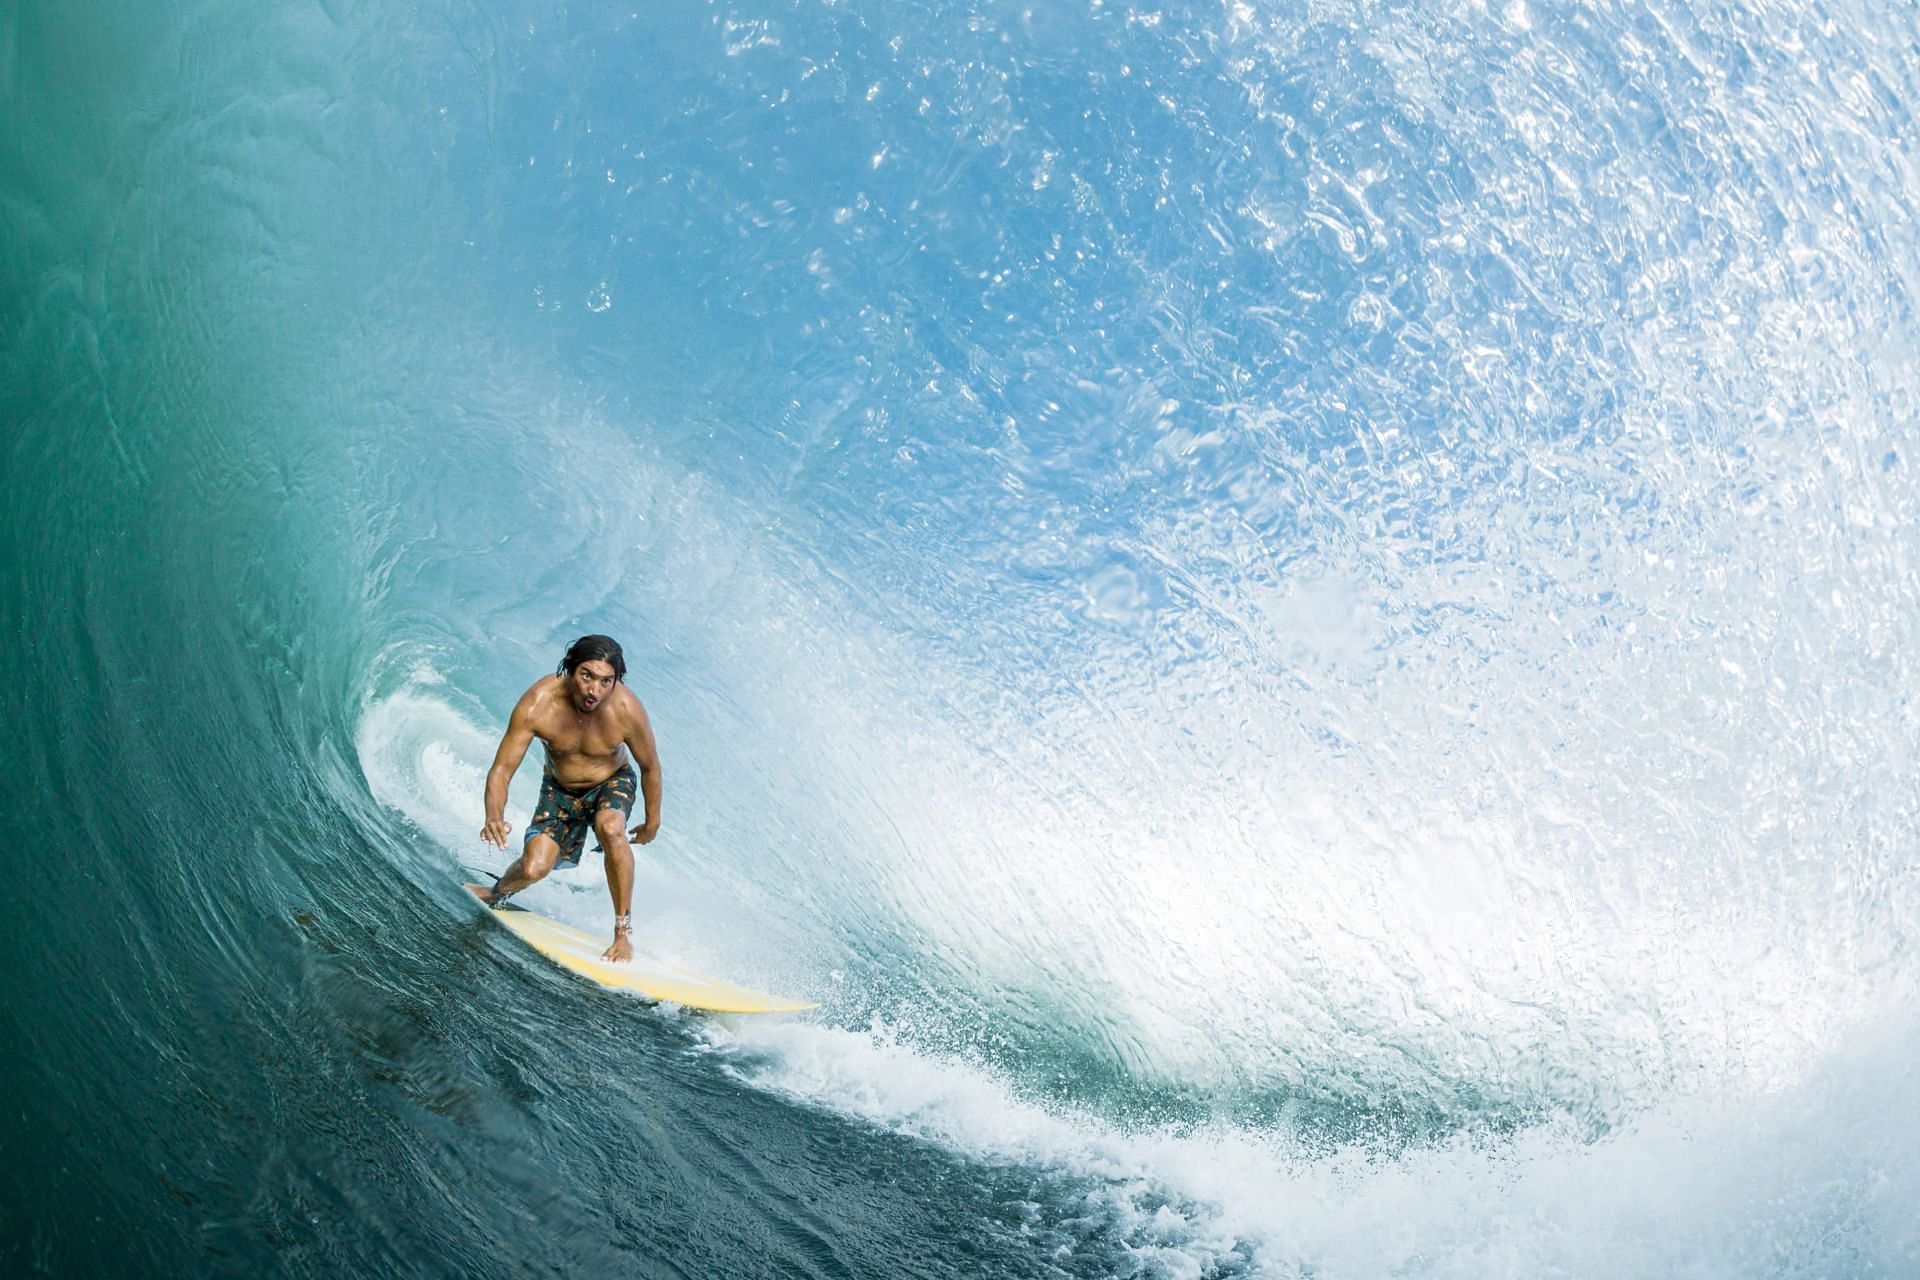 Mikala Jones was an inspirational surfer (Image via Federico Vanno/Liquid Barrel)